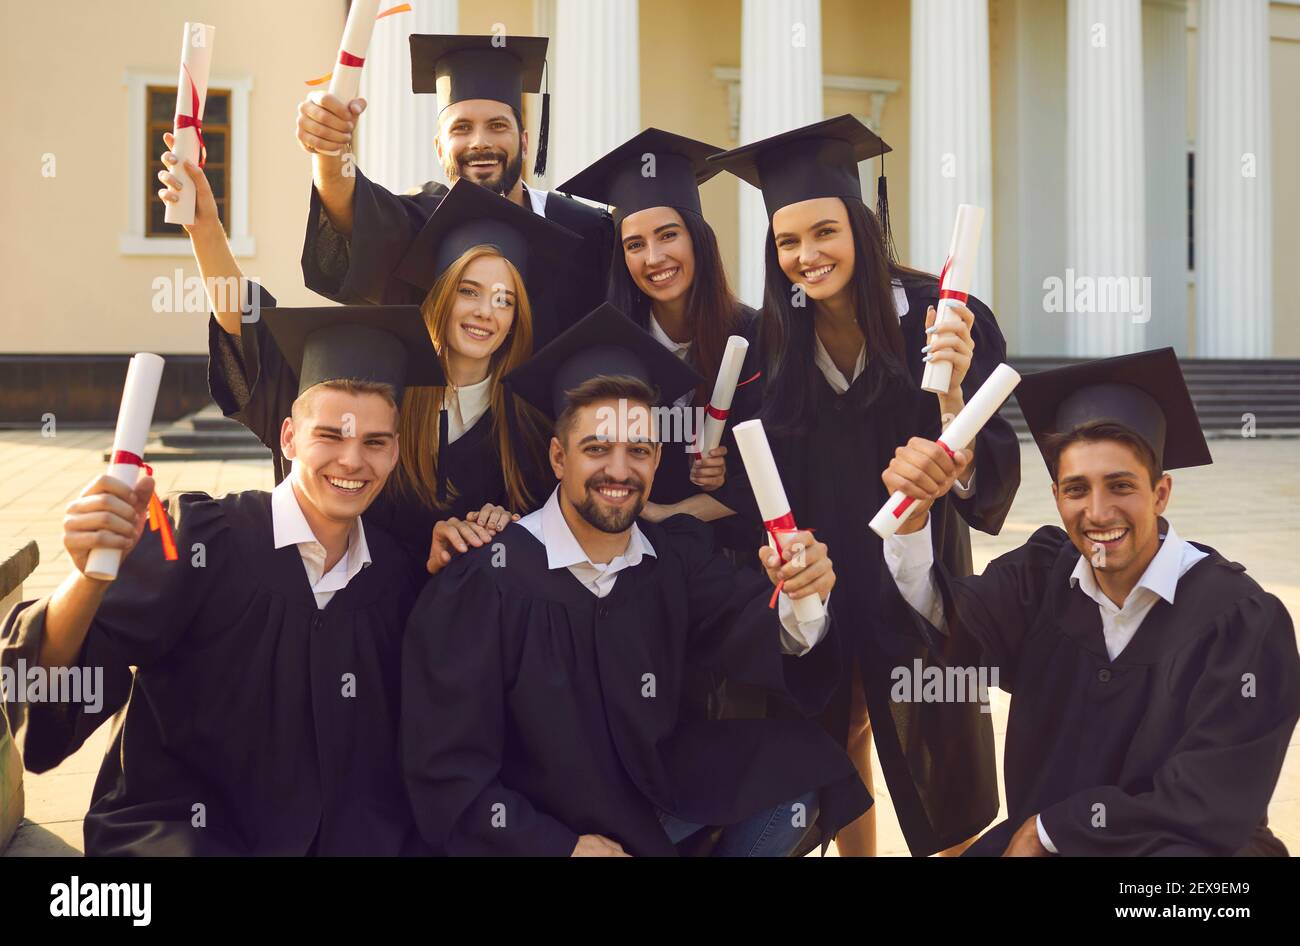 Collective photo of smiling boys and girls students university graduates celebrating getting diplomas Stock Photo